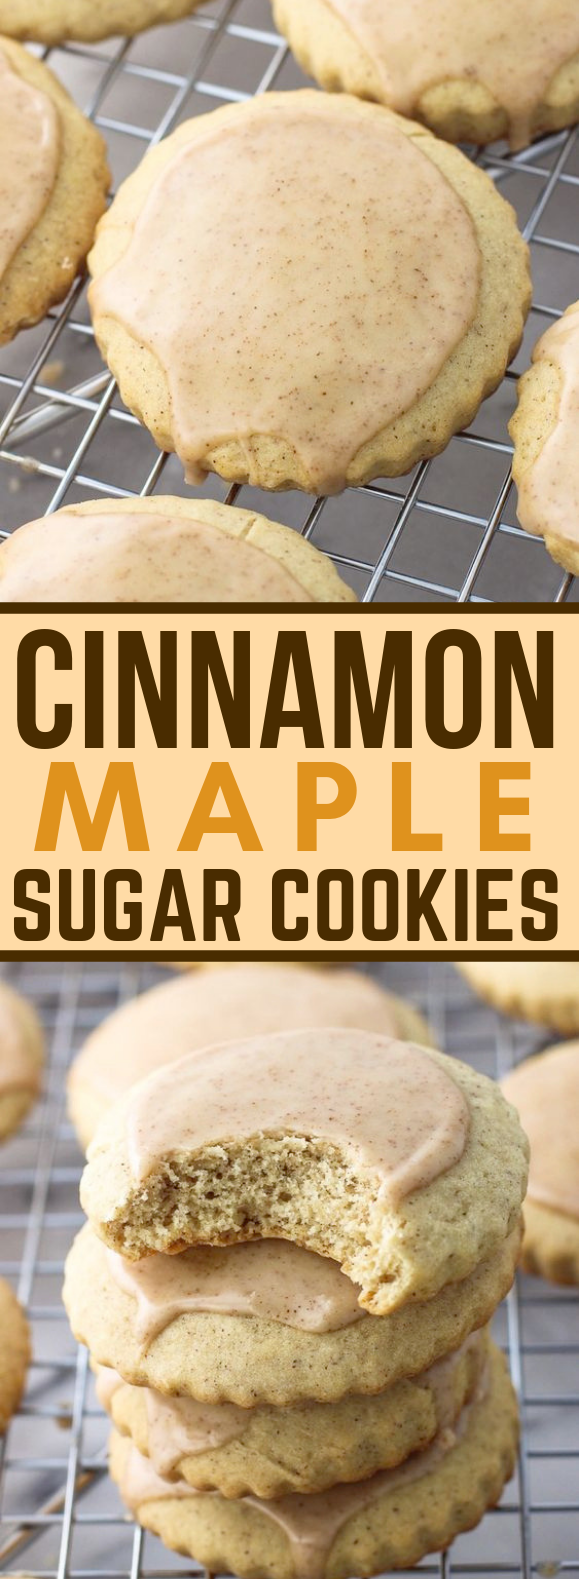 Cinnamon Maple Sugar Cookies